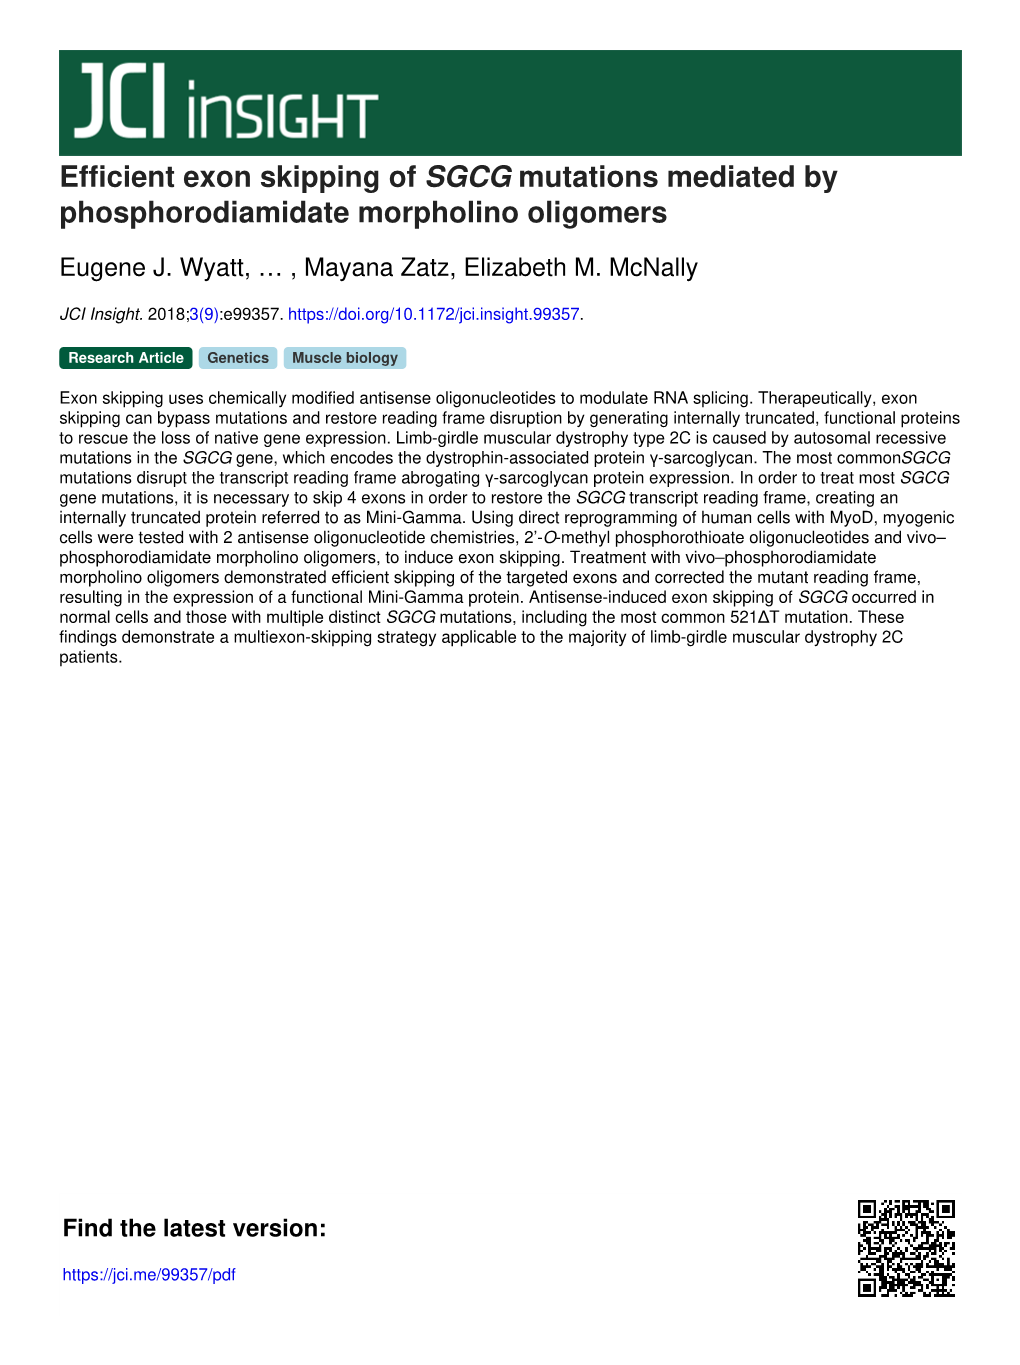 Efficient Exon Skipping of SGCG Mutations Mediated by Phosphorodiamidate Morpholino Oligomers